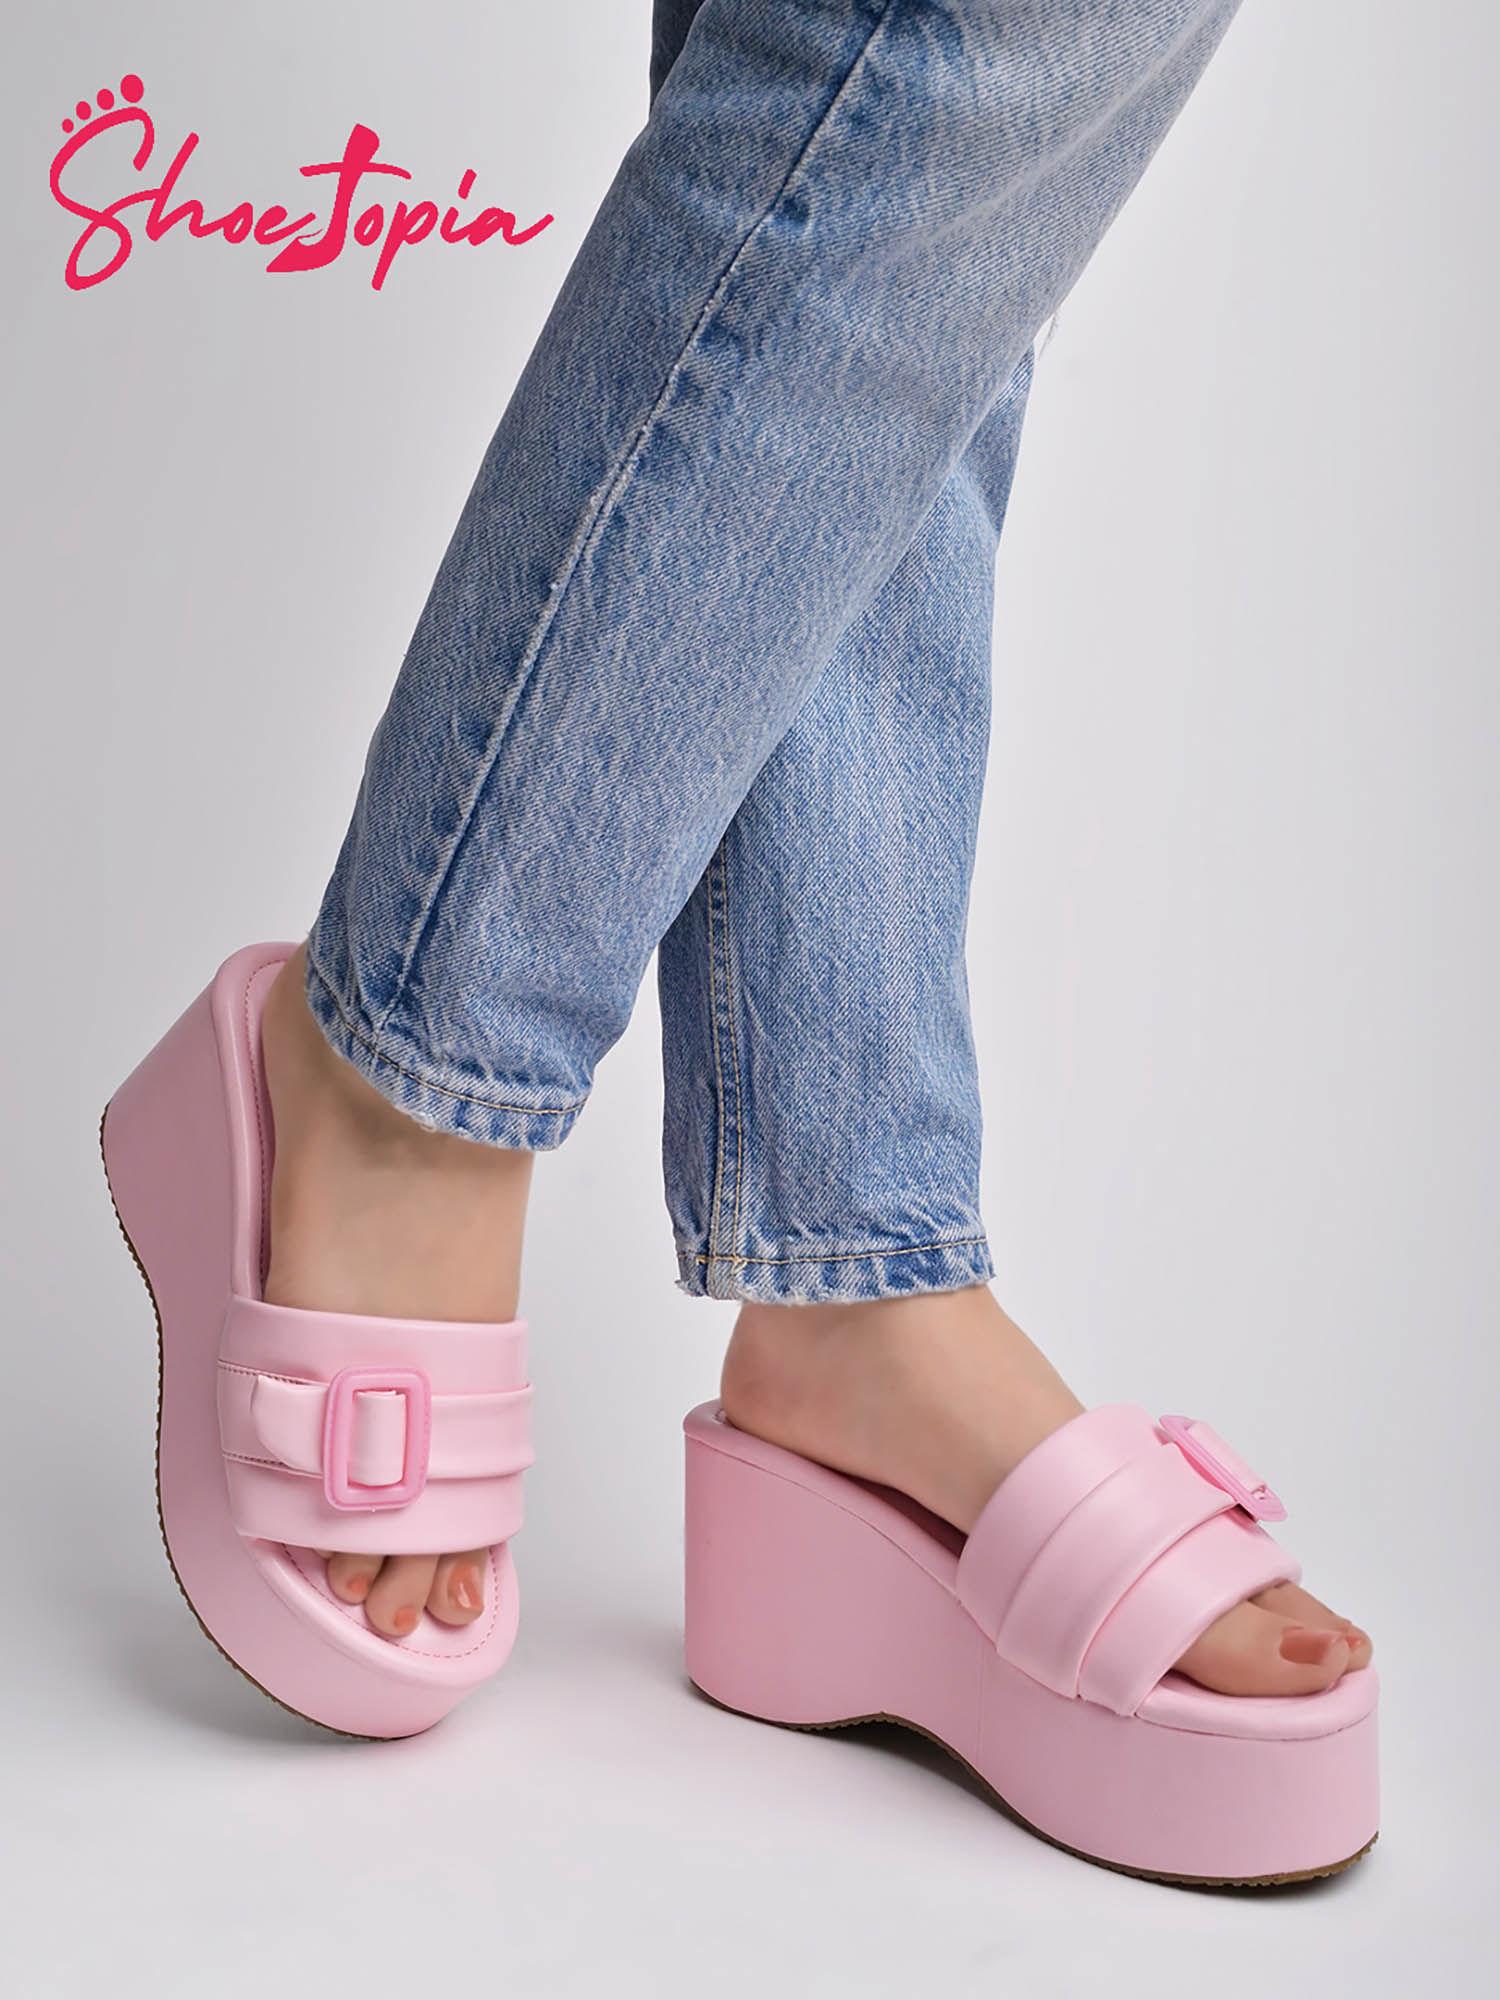 buckle detailed pink platform heel sandals